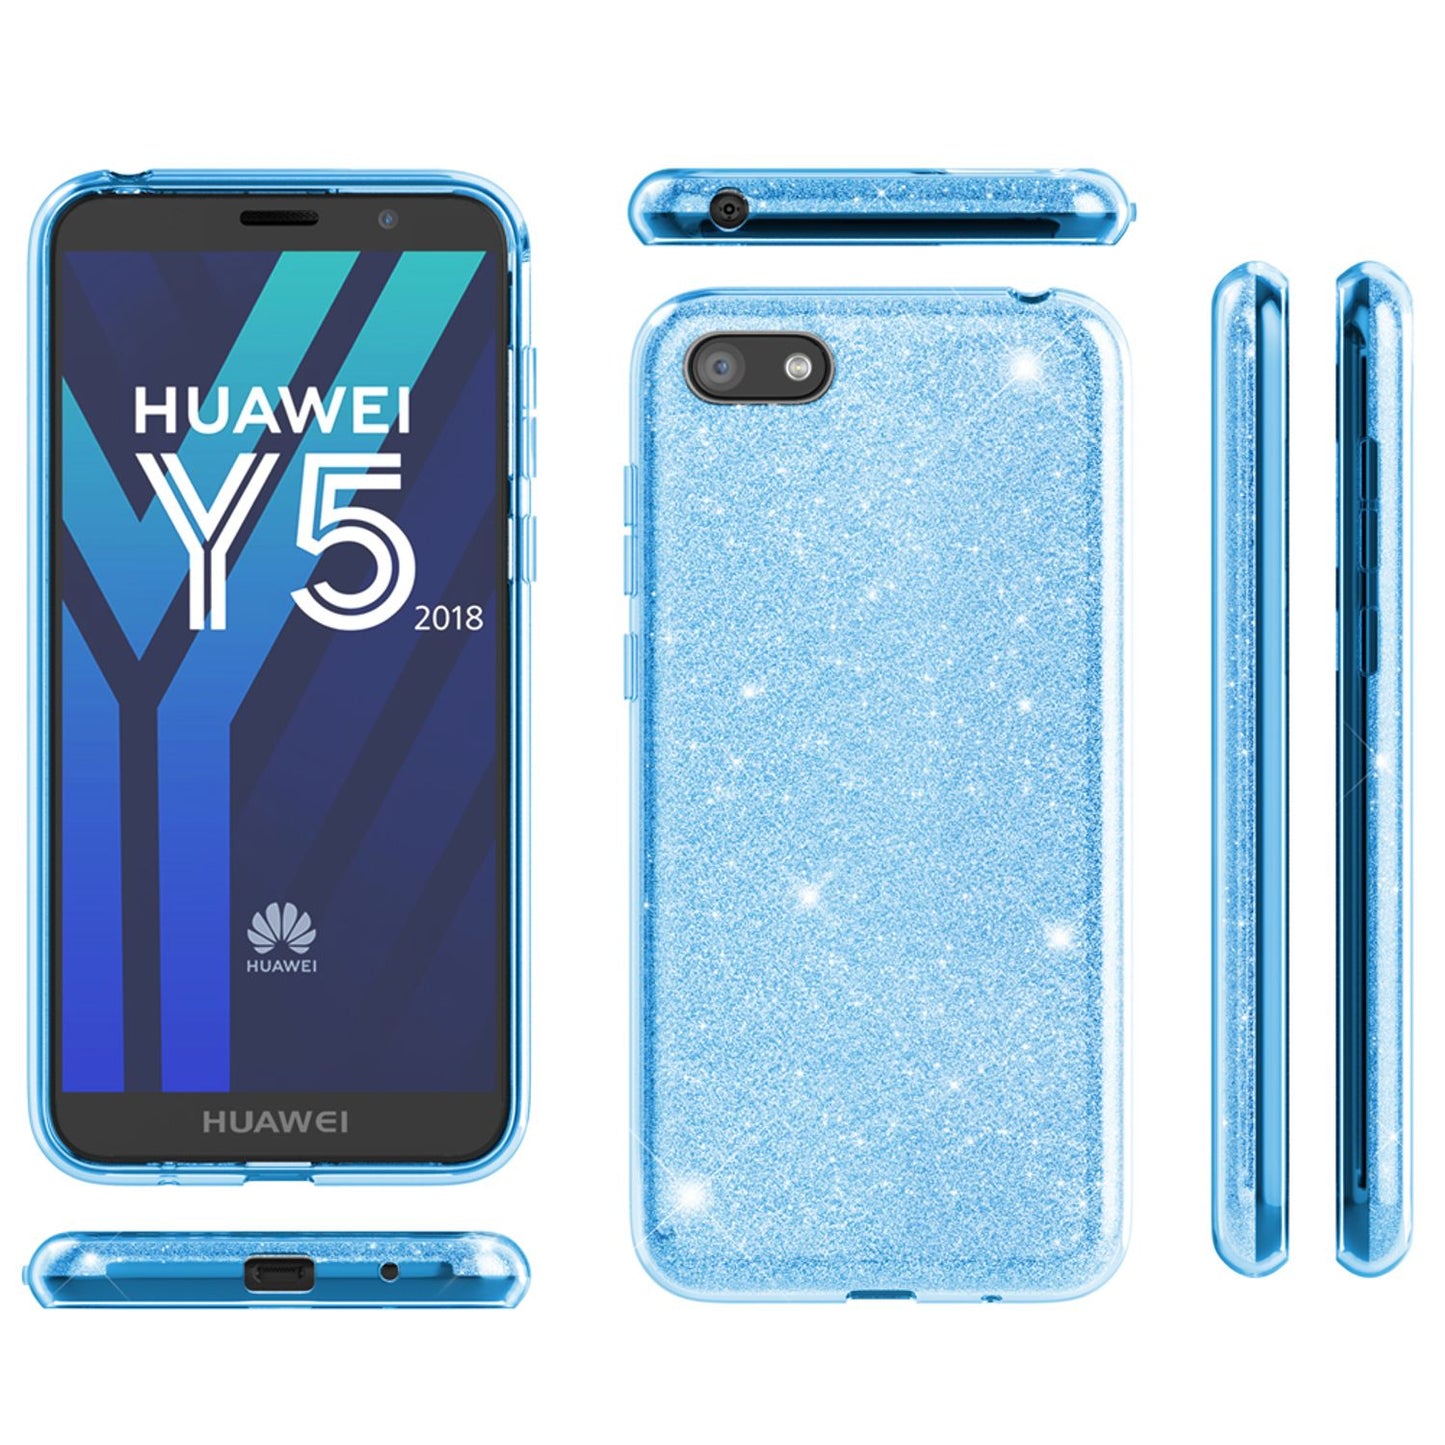 NALIA Handyhülle kompatibel mit Huawei Y5 2018, Glitzer Case Back Bling Cover